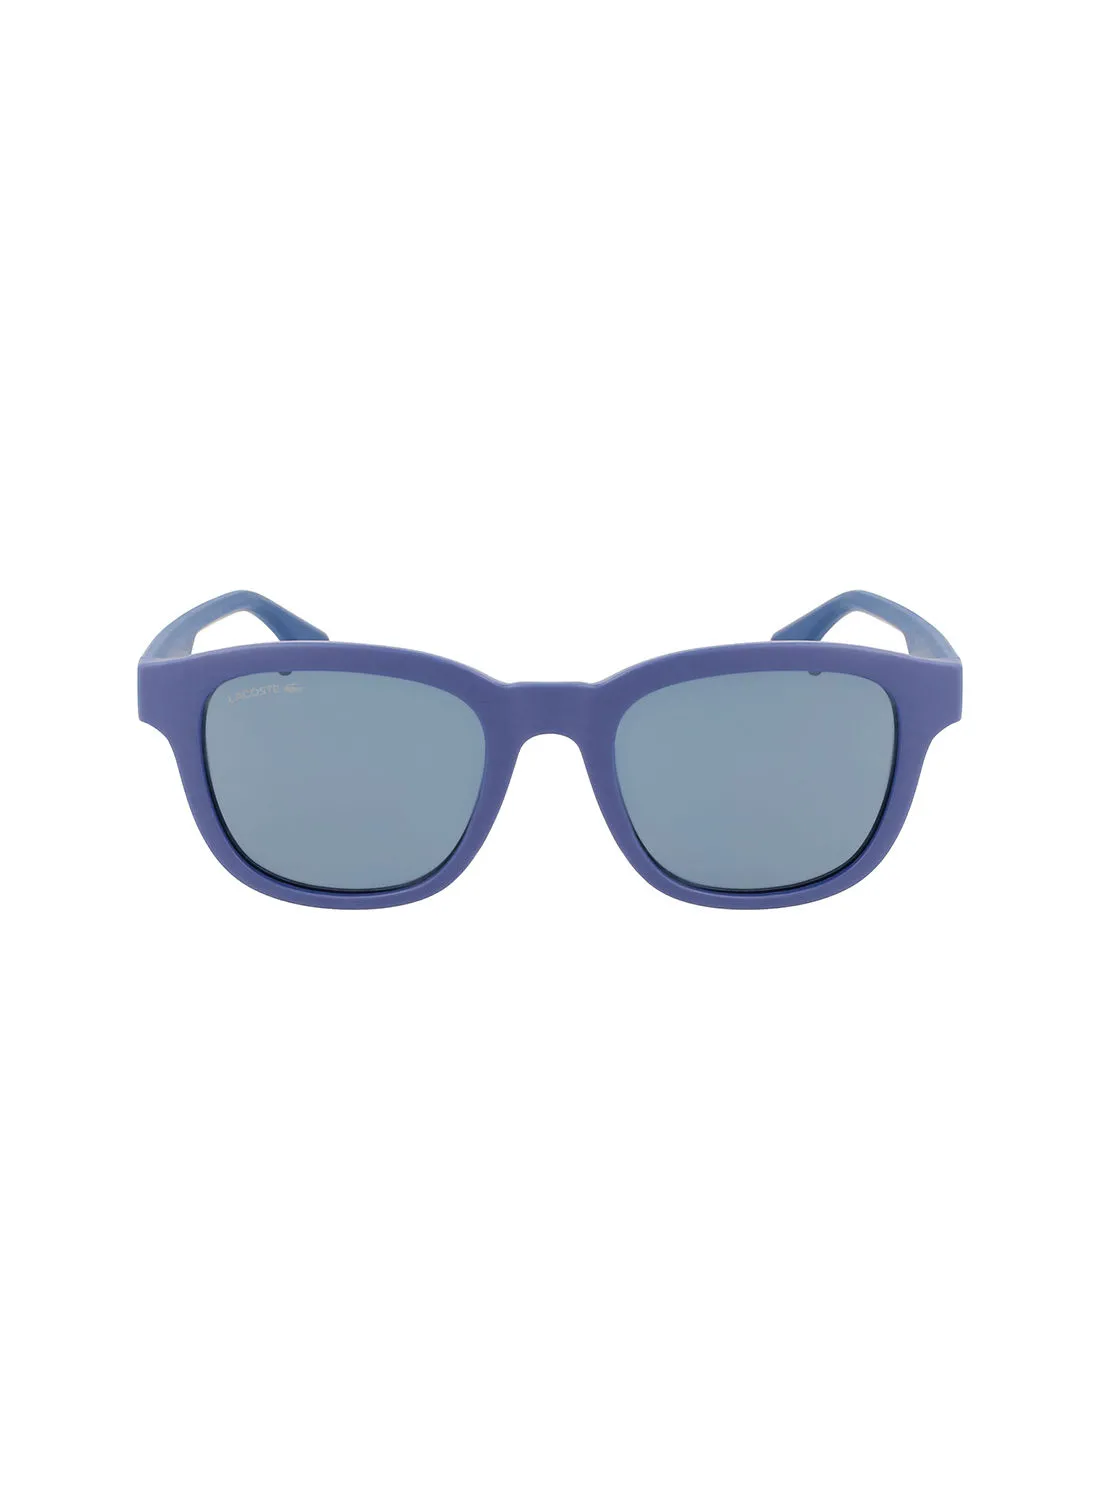 LACOSTE UV Rays Protection Eyewear Sunglasses L966S-401-5020